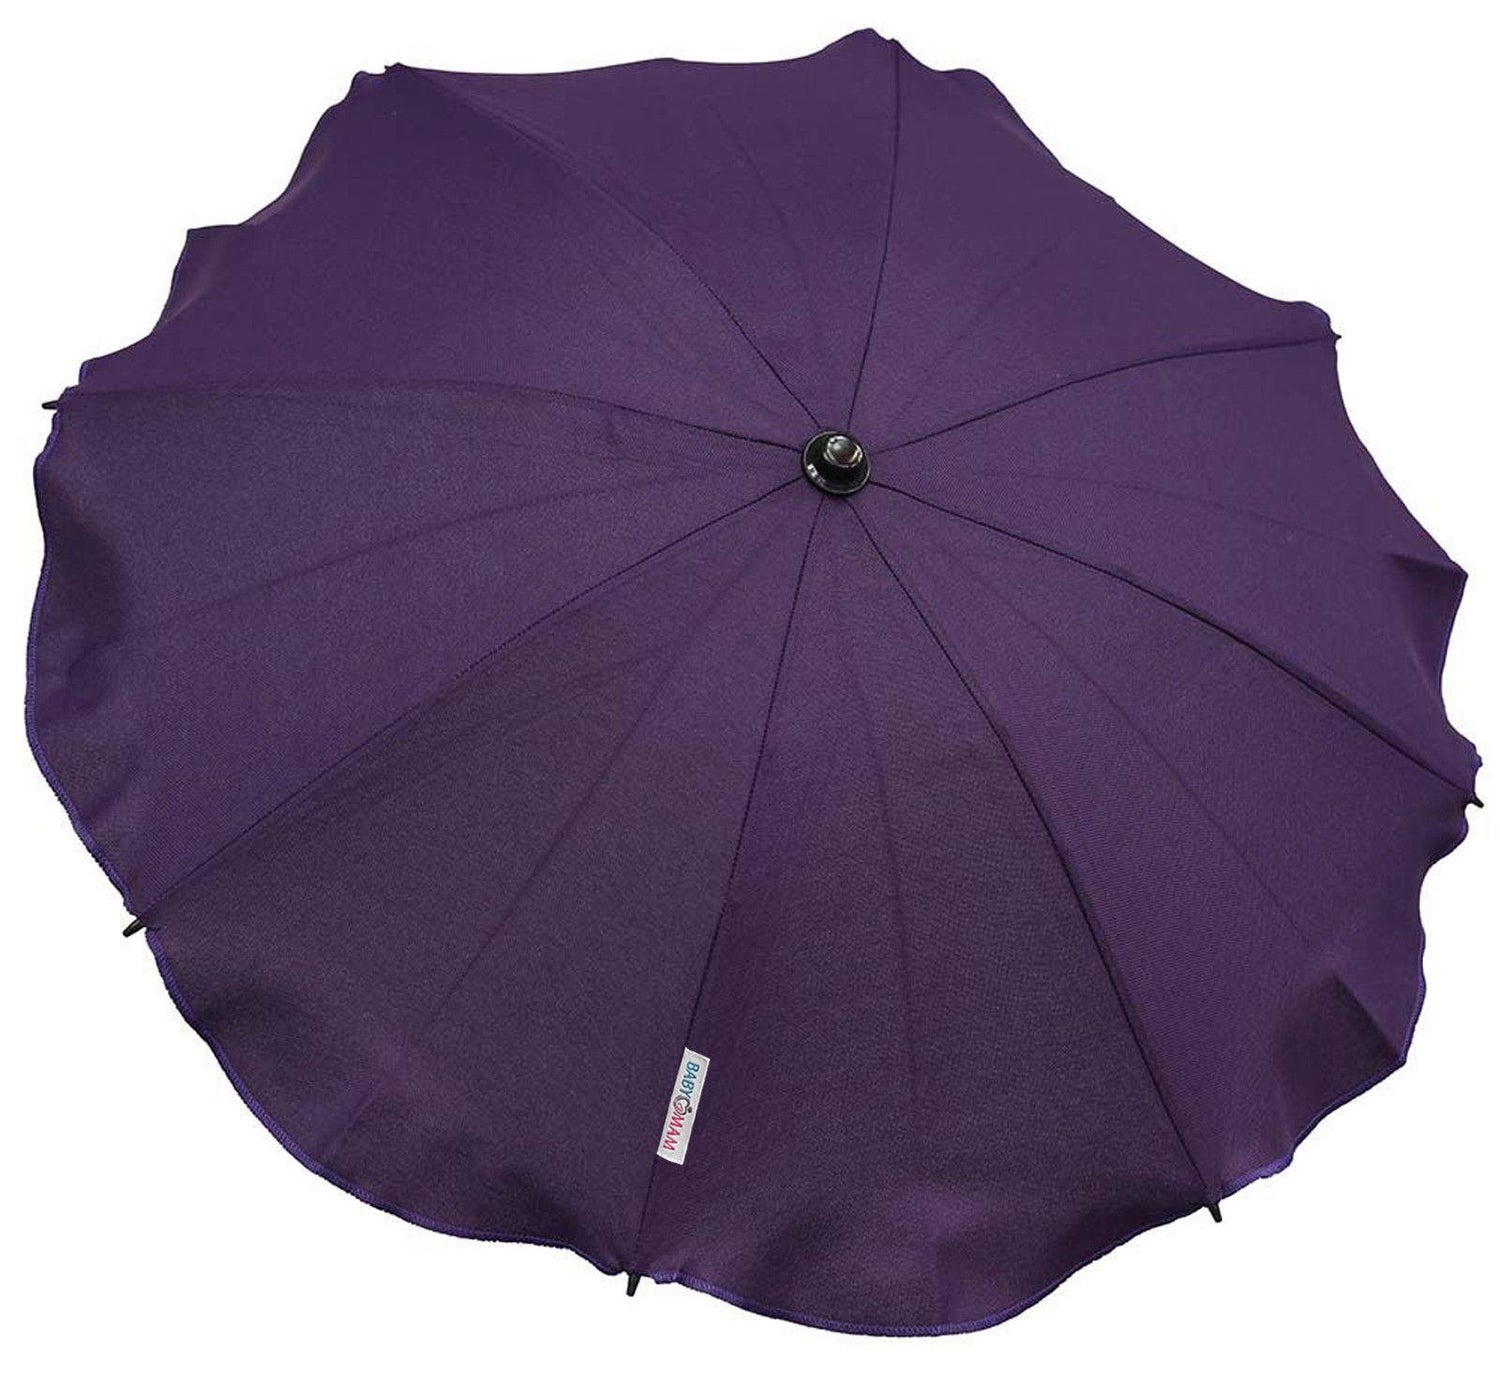 Baby Parasol Universal Sun Umbrella Pram Stroller Canopy Protect From Sun Rain Dark Purple